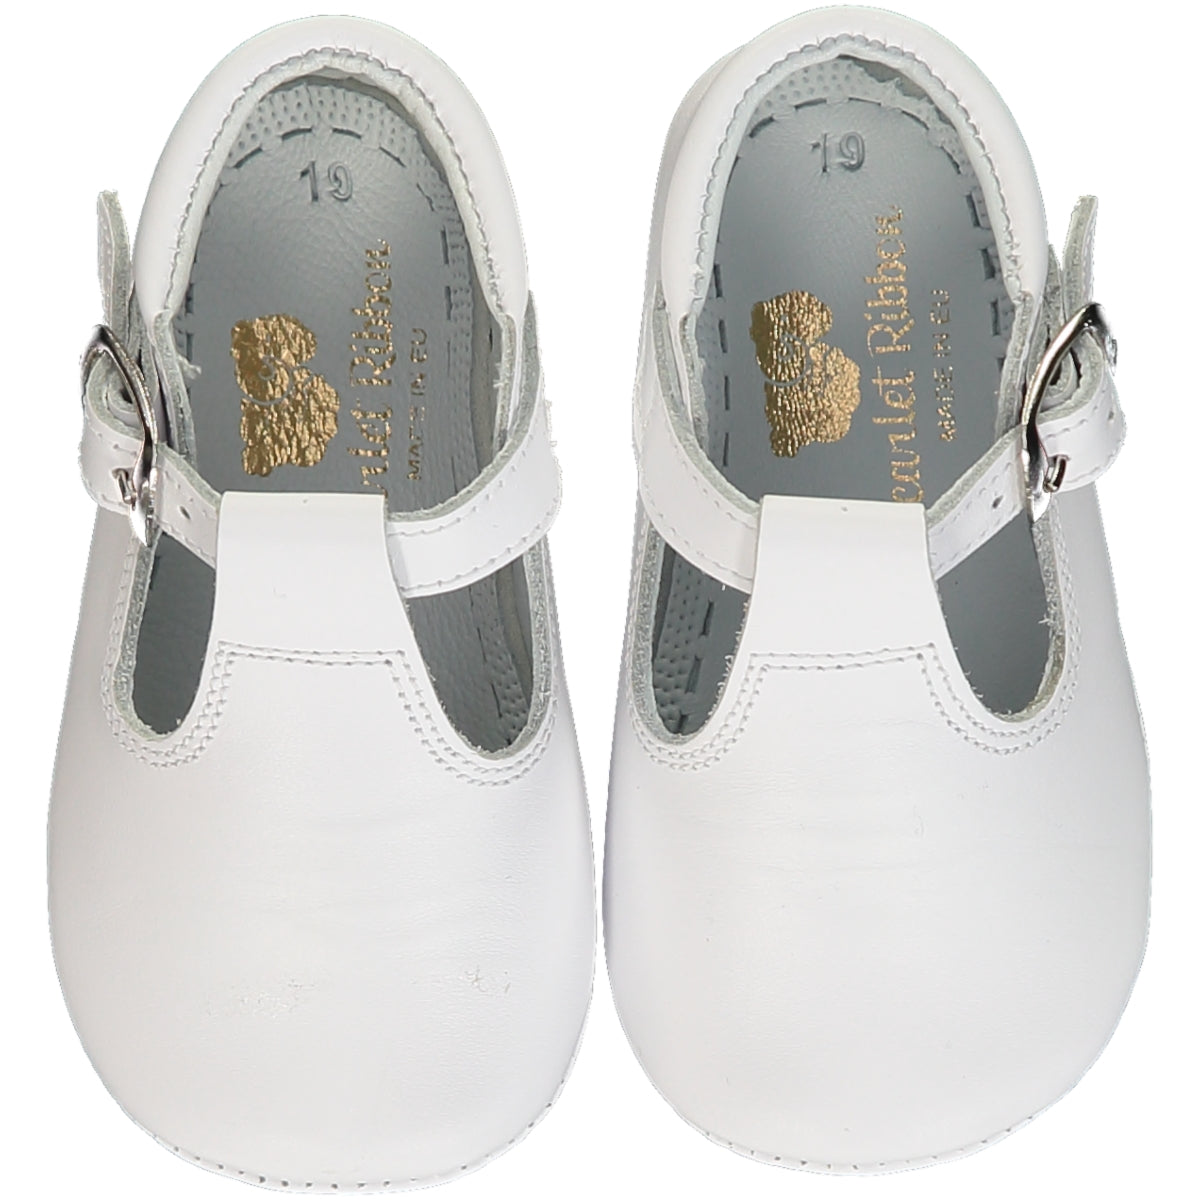 white leather pram shoes